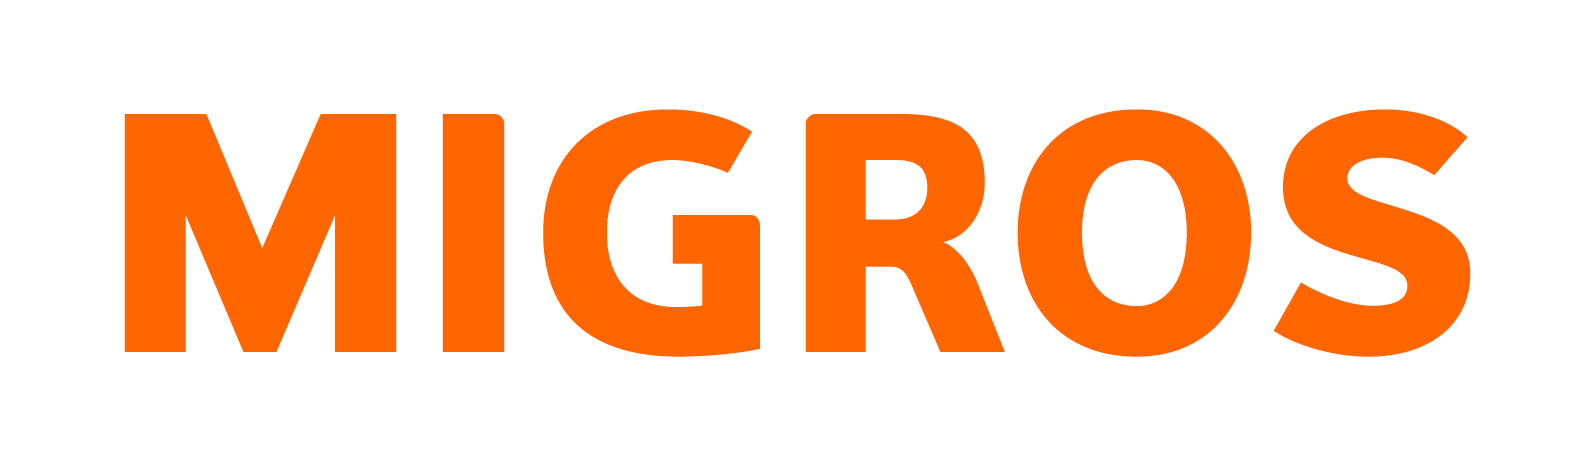 Migros_Logo_Orange_Weiss (002).png